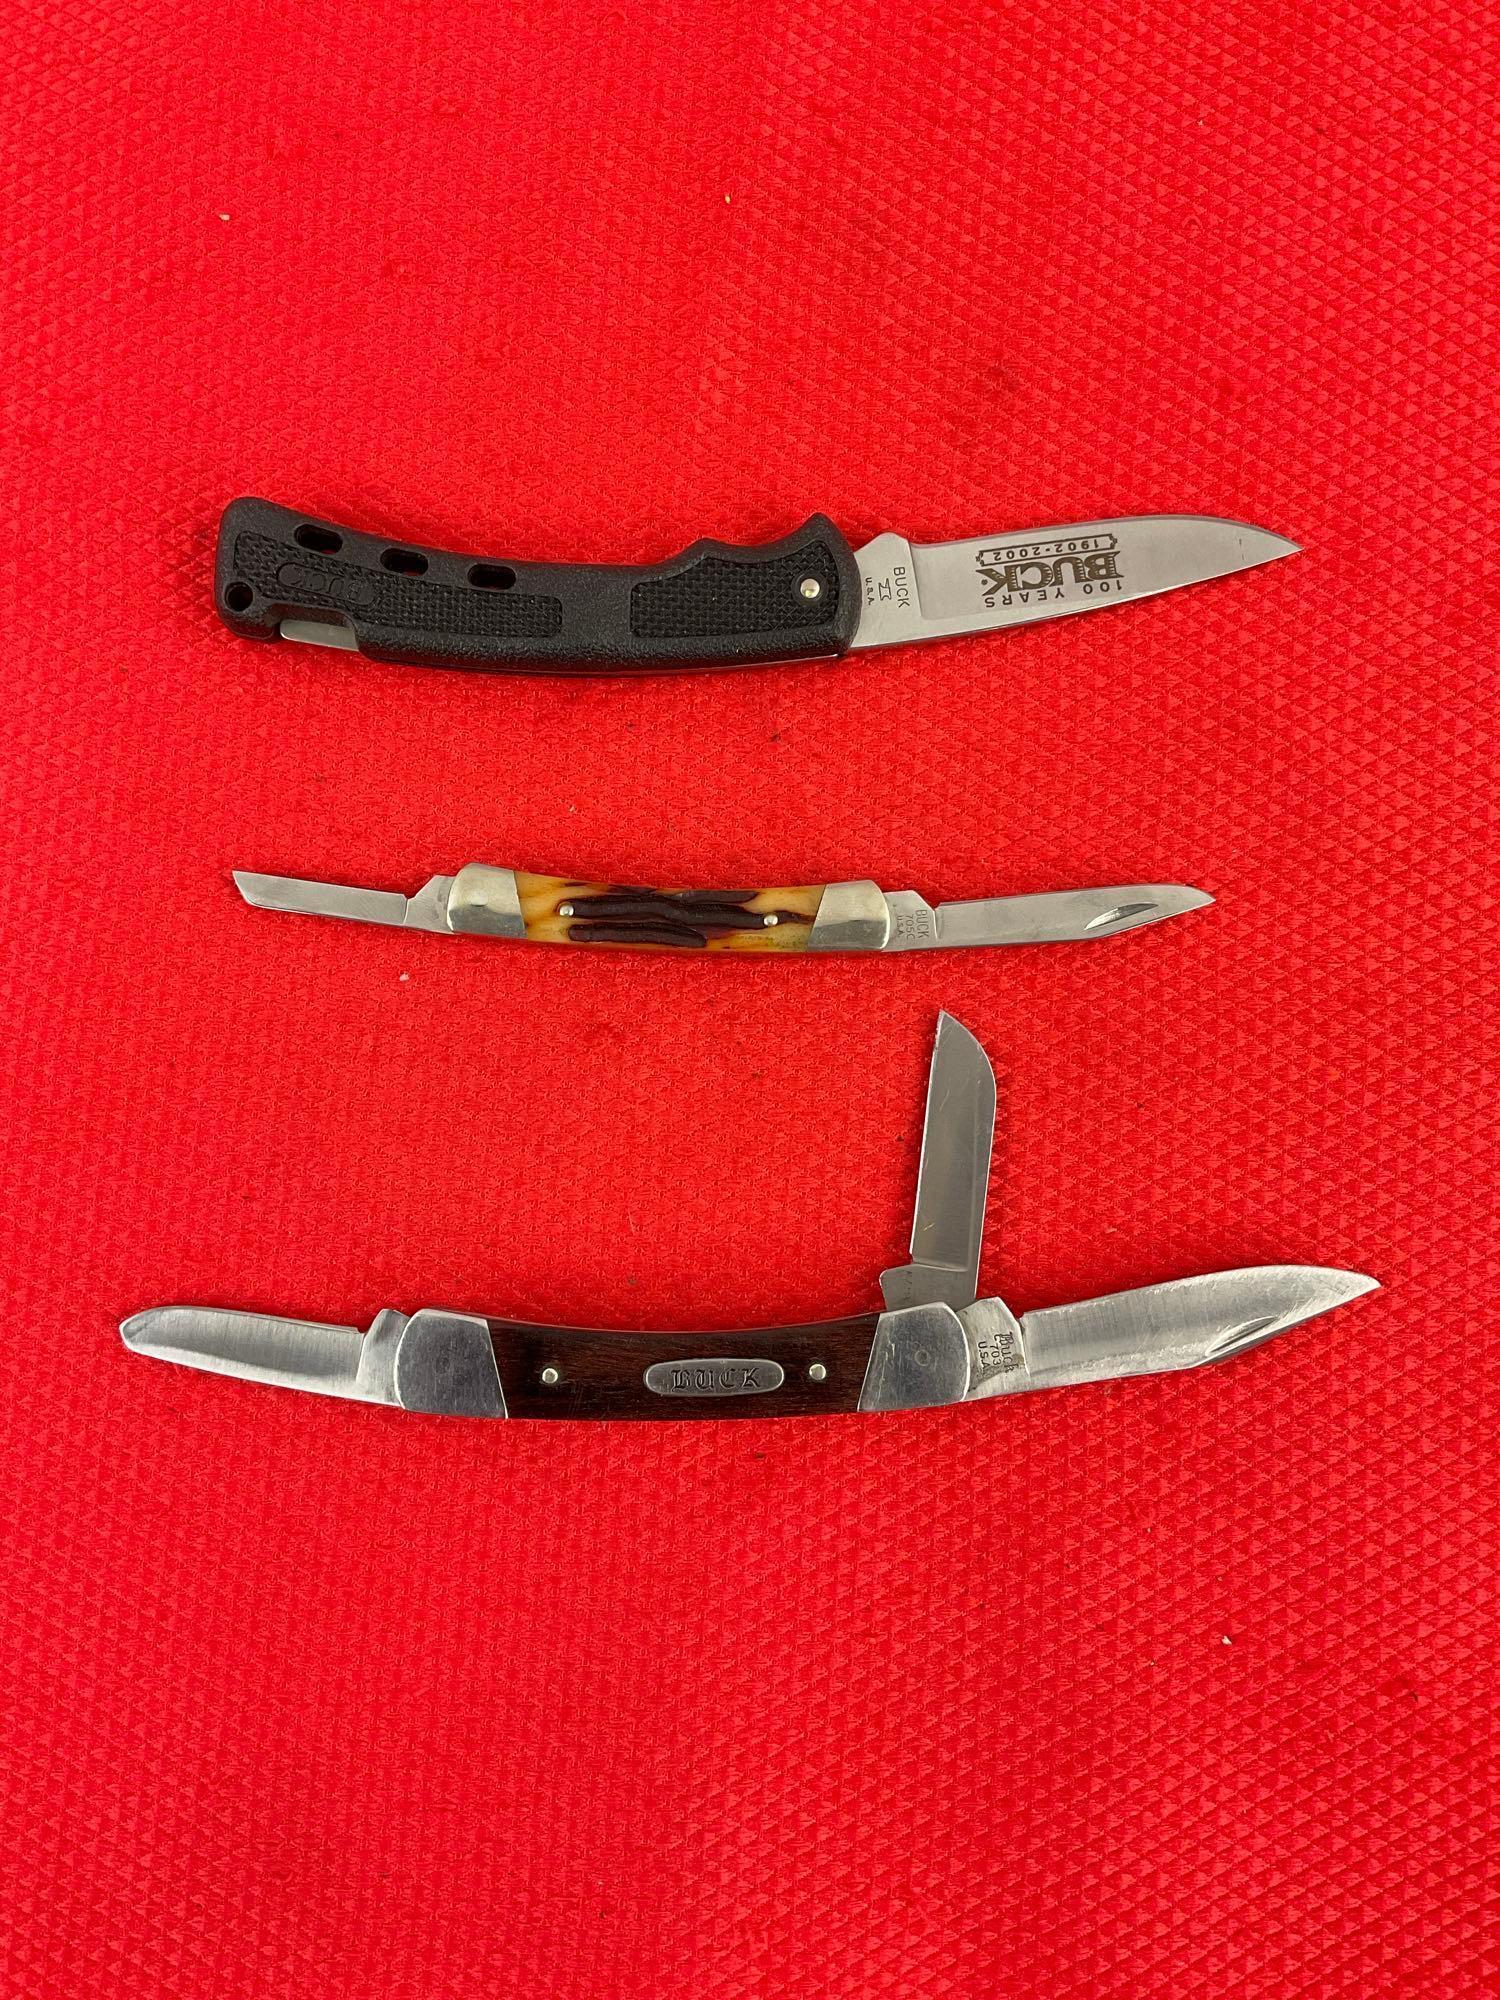 3 pcs Buck Steel Folding Blade Collectible Pocket Knives Models 703, 705 & B444. Signed. See pics.